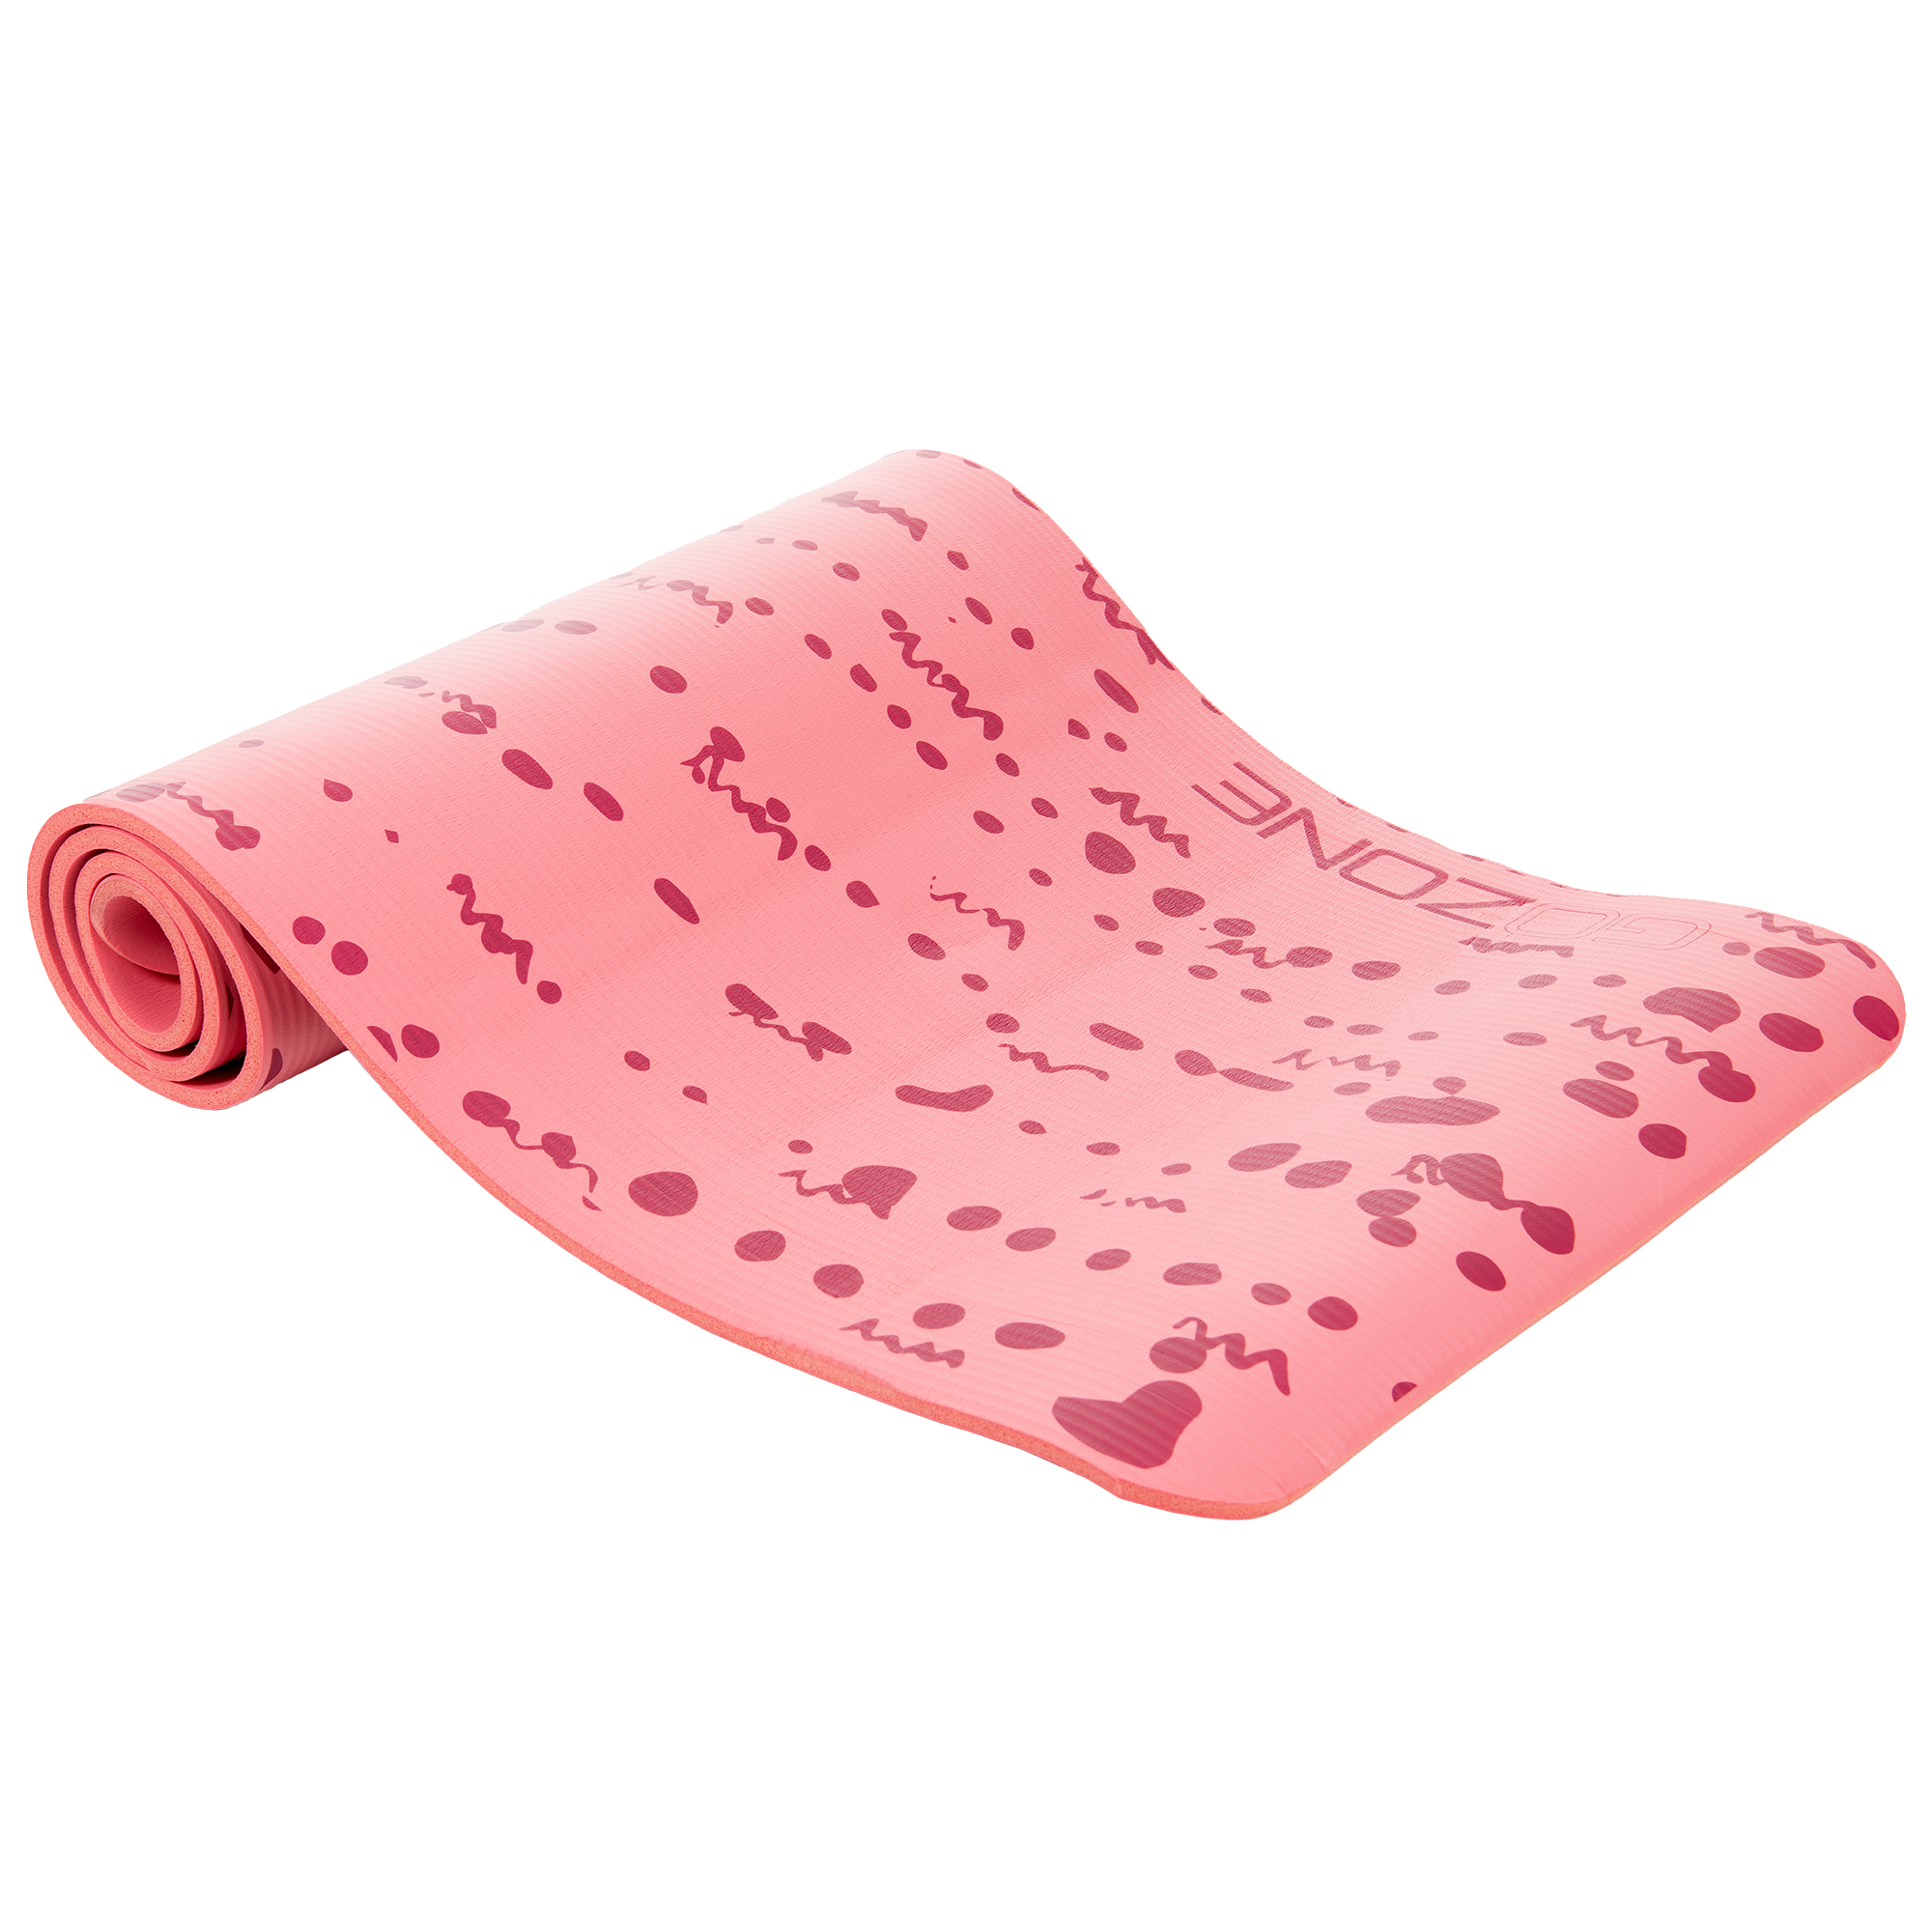 Gaiam Essentials Fitness Mat & Sling (10mm) Pink flat